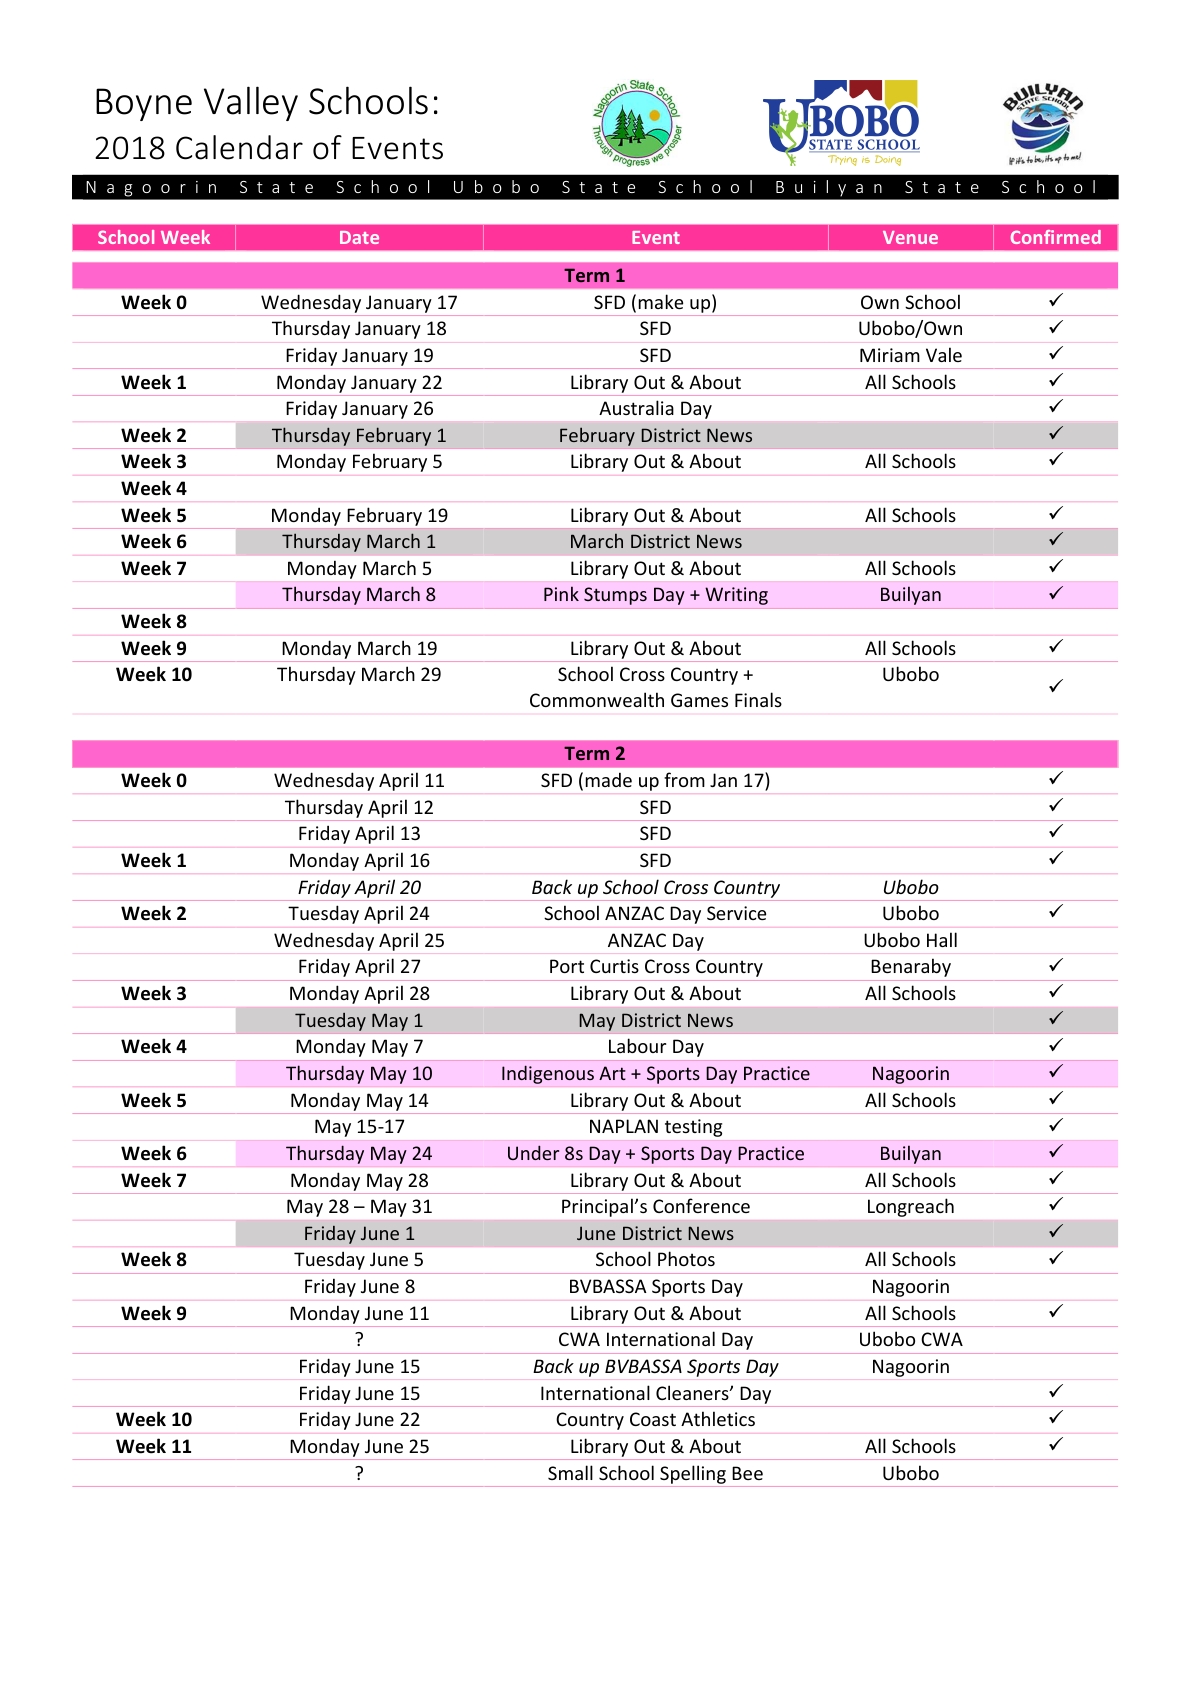 2018 Boyne Valley Schools Calendar of Events1.jpg